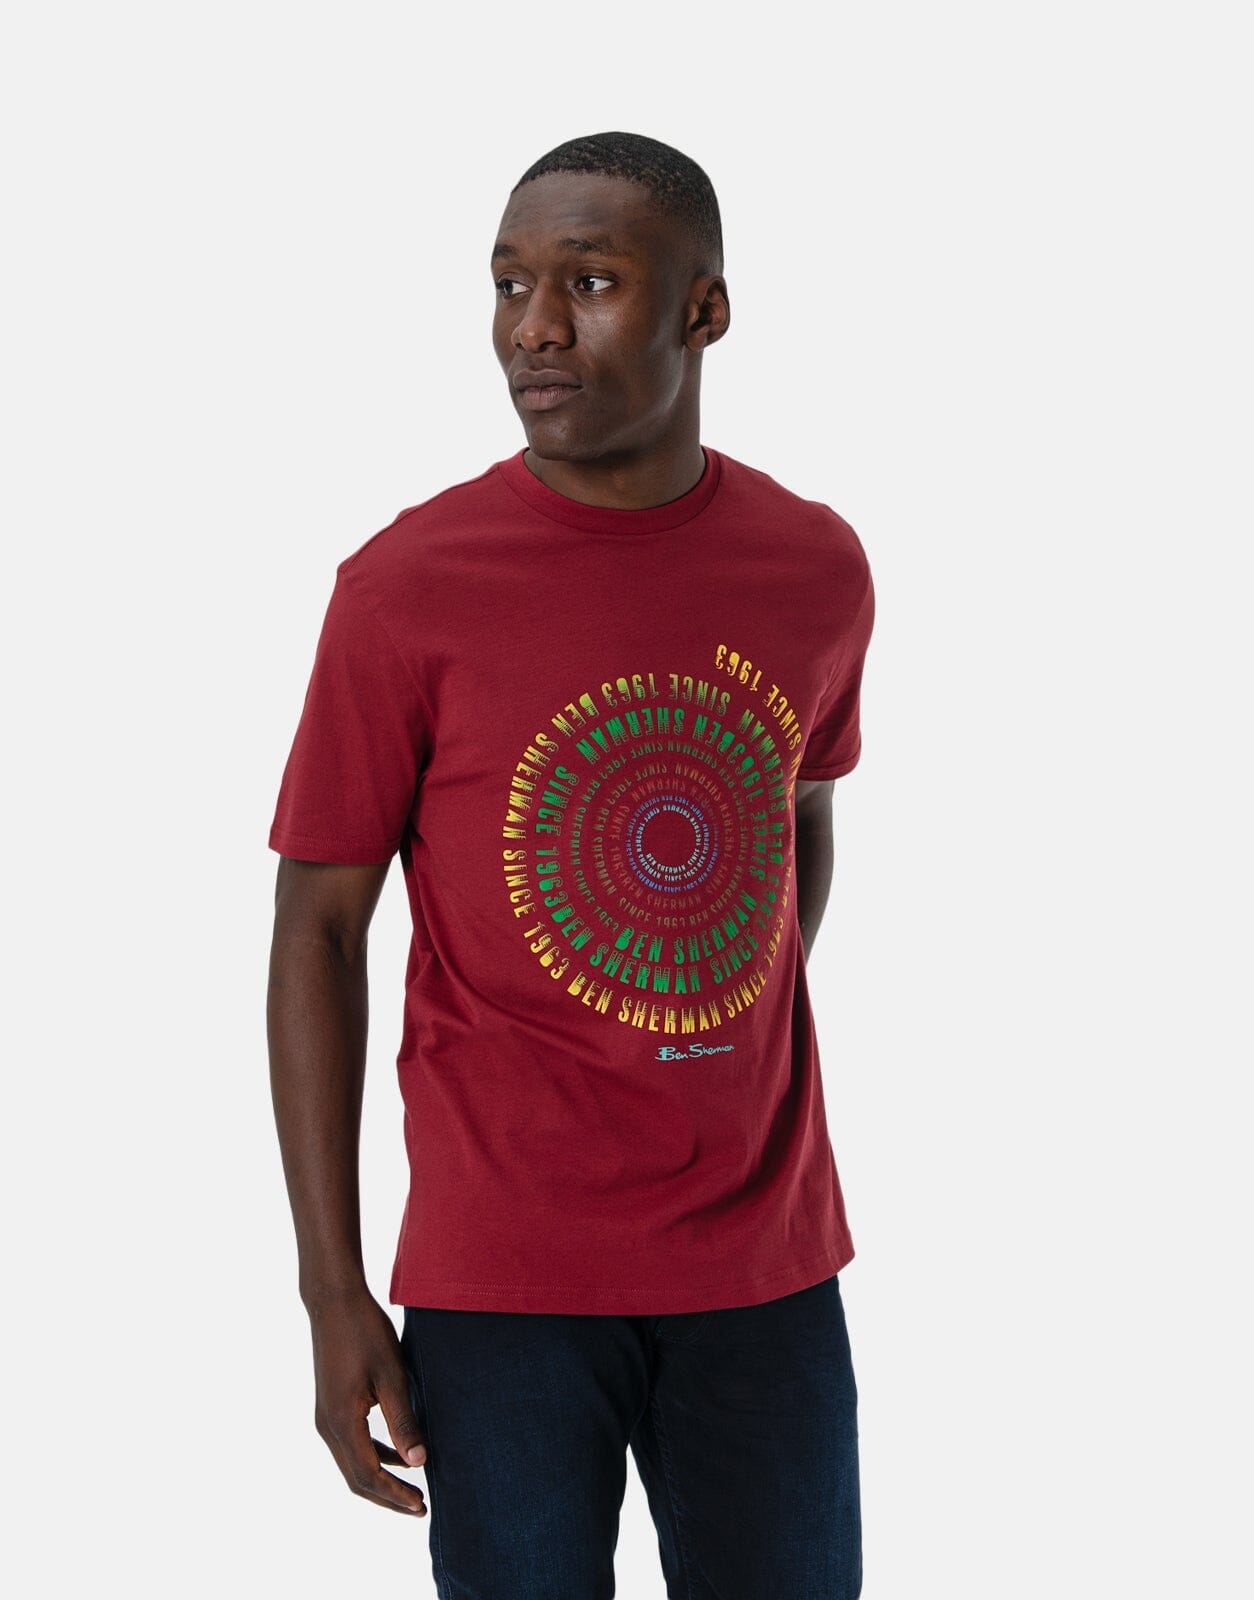 Ben Sherman Swirl Target Berry T-Shirt - Subwear